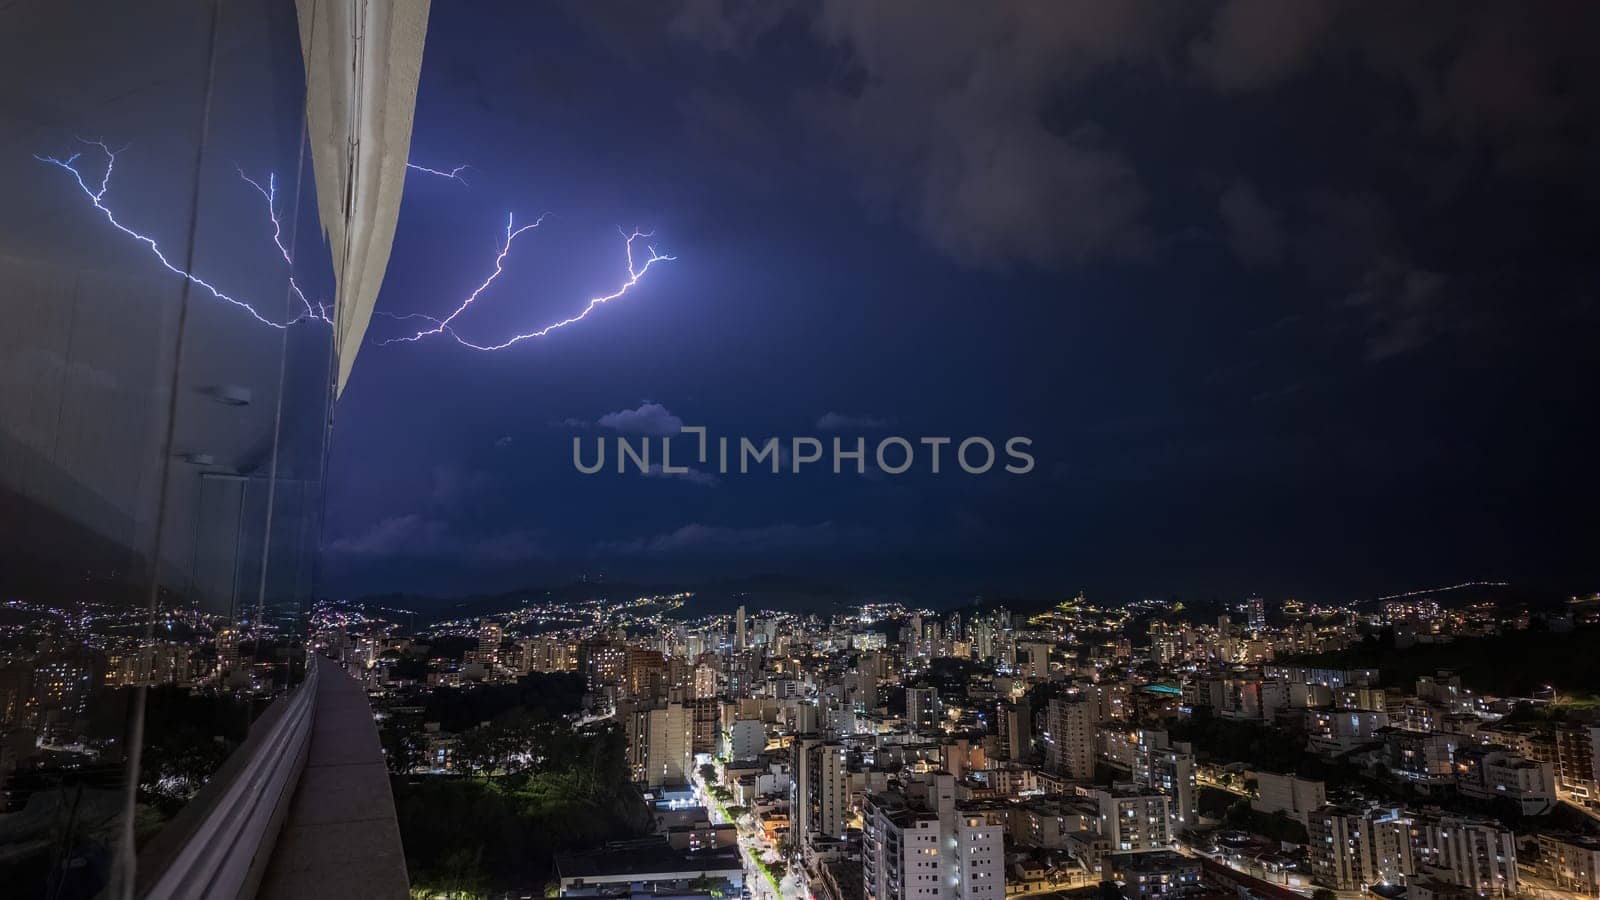 Lightning illuminates city at night, casting a striking scene.